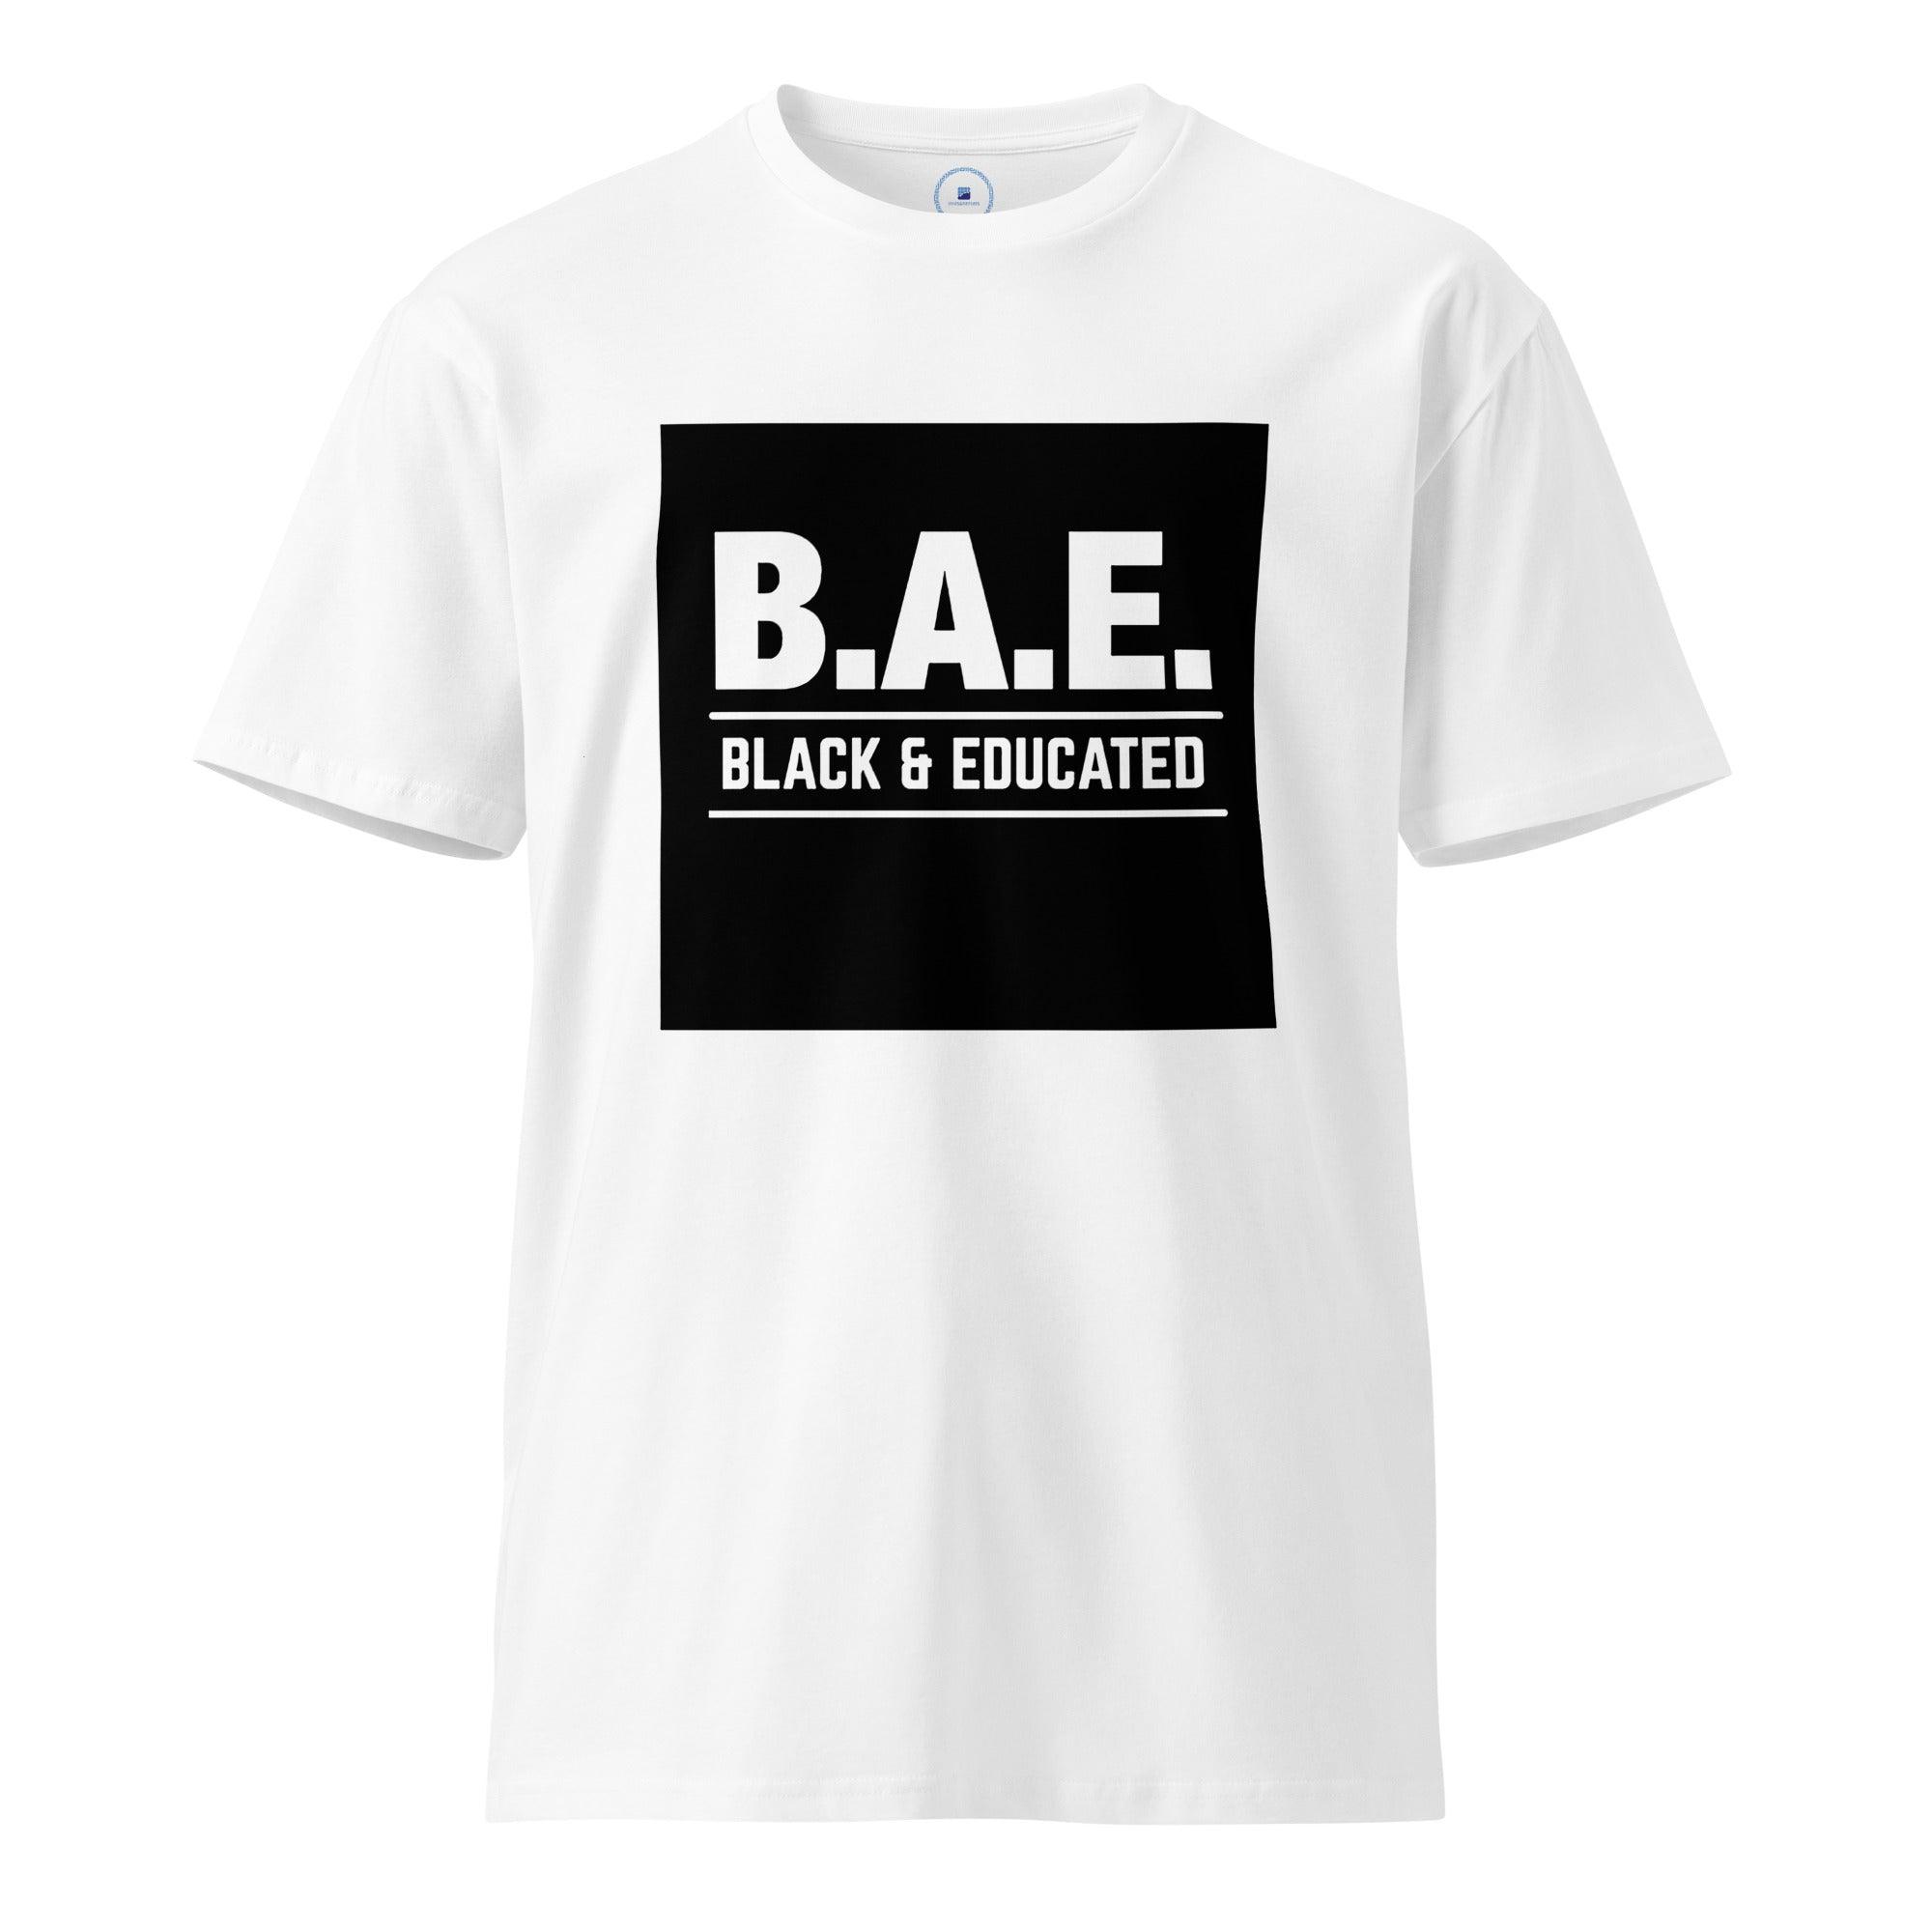 BAE | Black & Educated T-Shirt - InvestmenTees